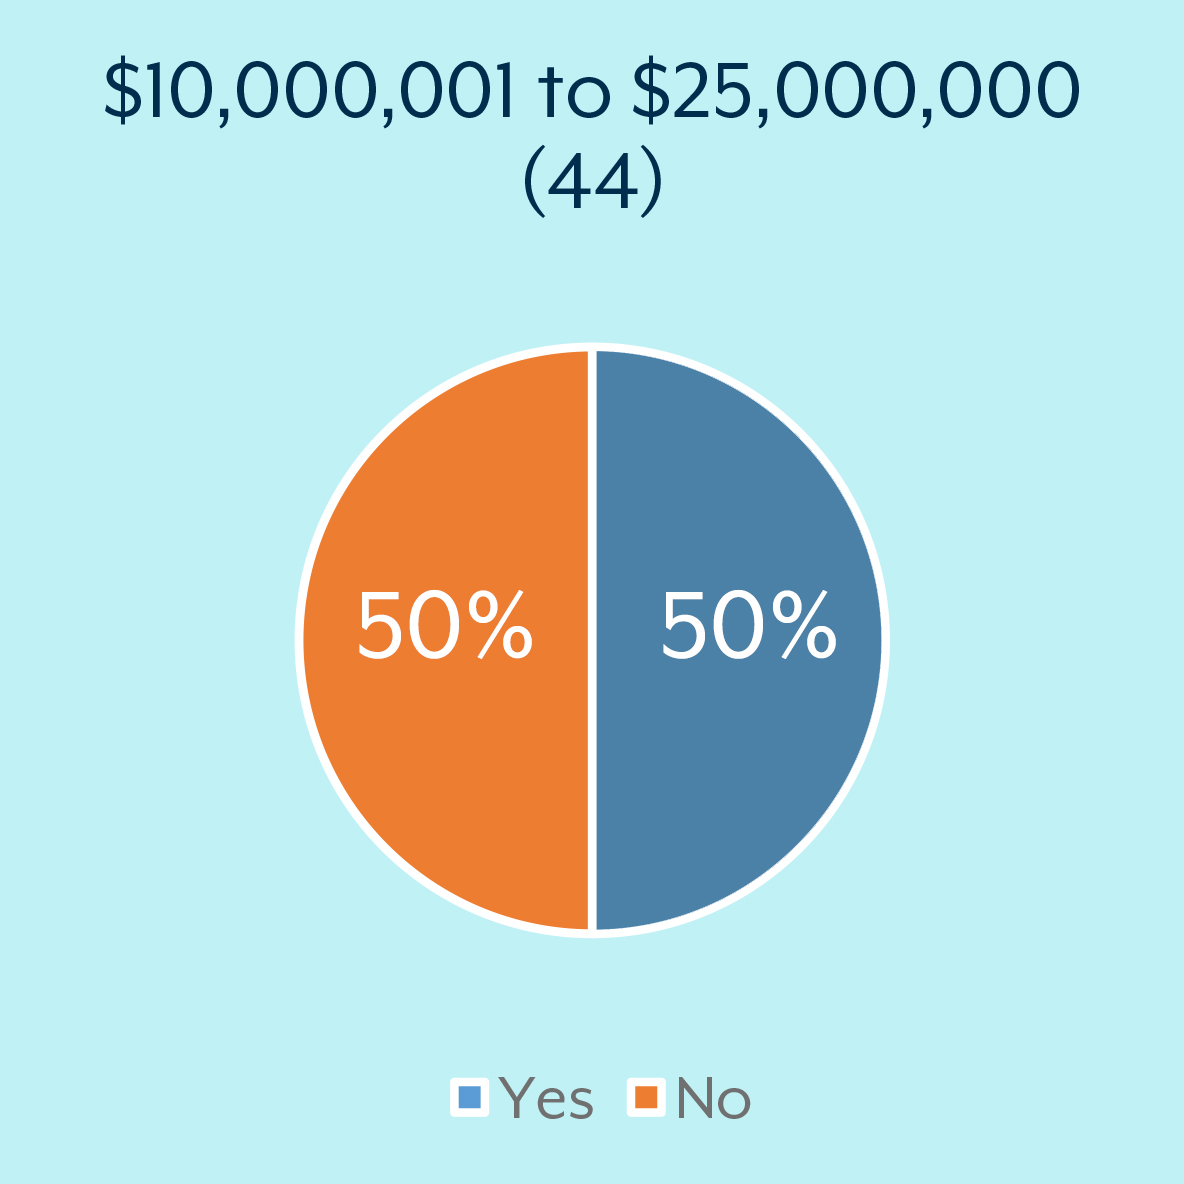 $10 million to $25 million: Yes = 50% No = 50%